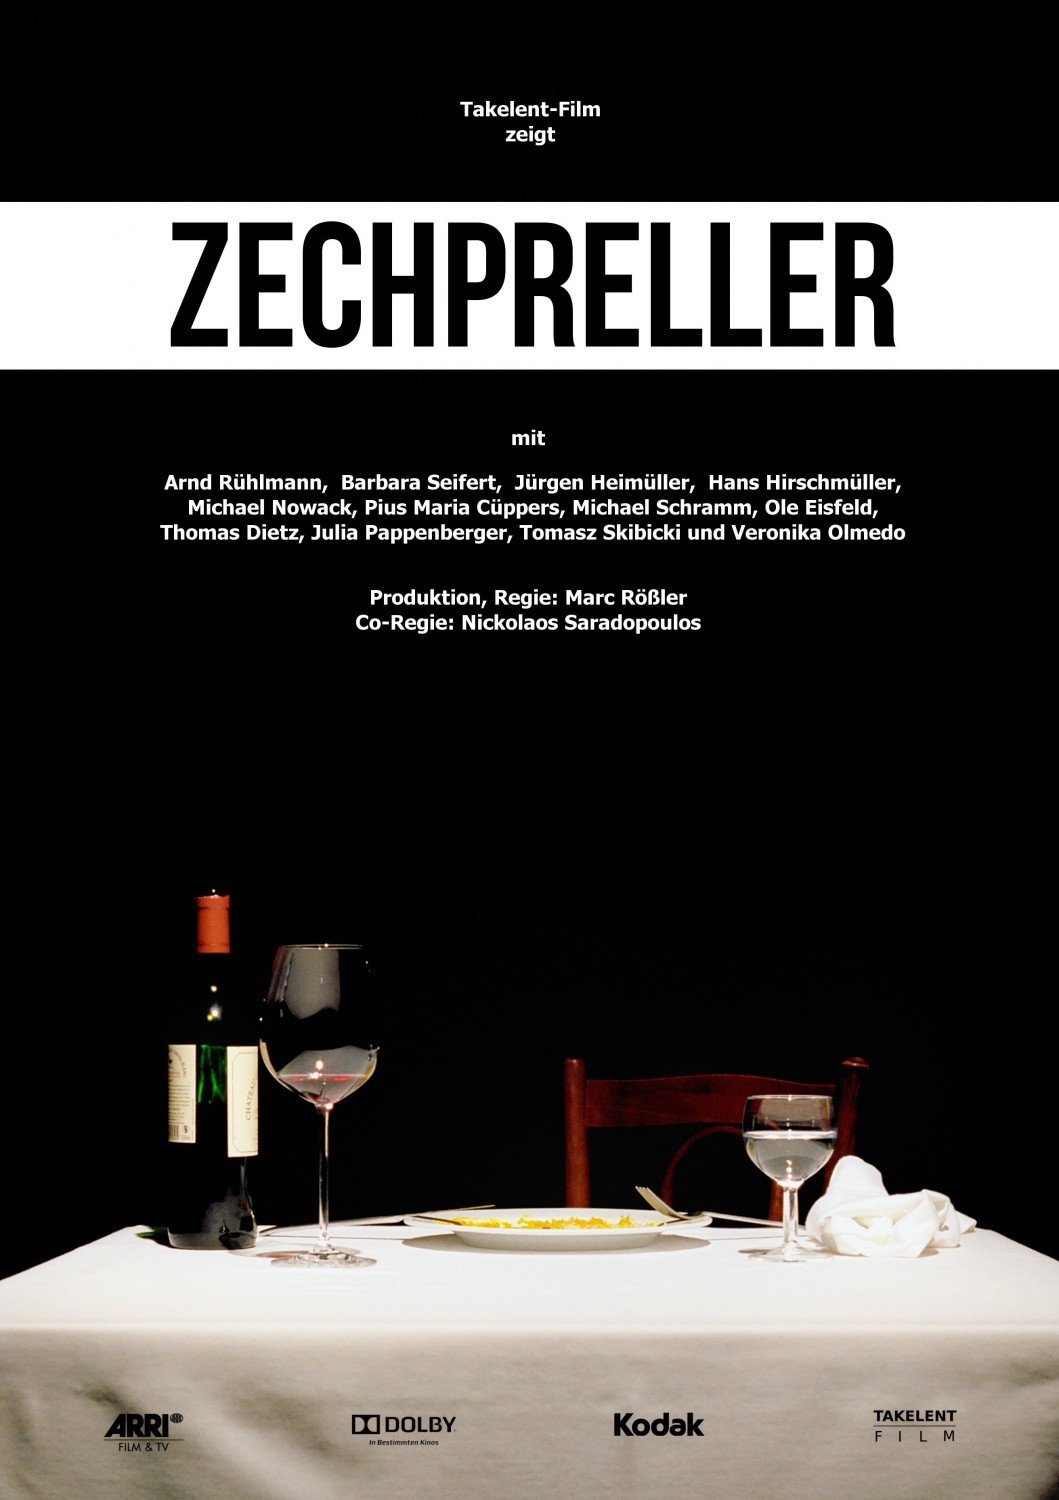 Extra Large Movie Poster Image for Zechpreller